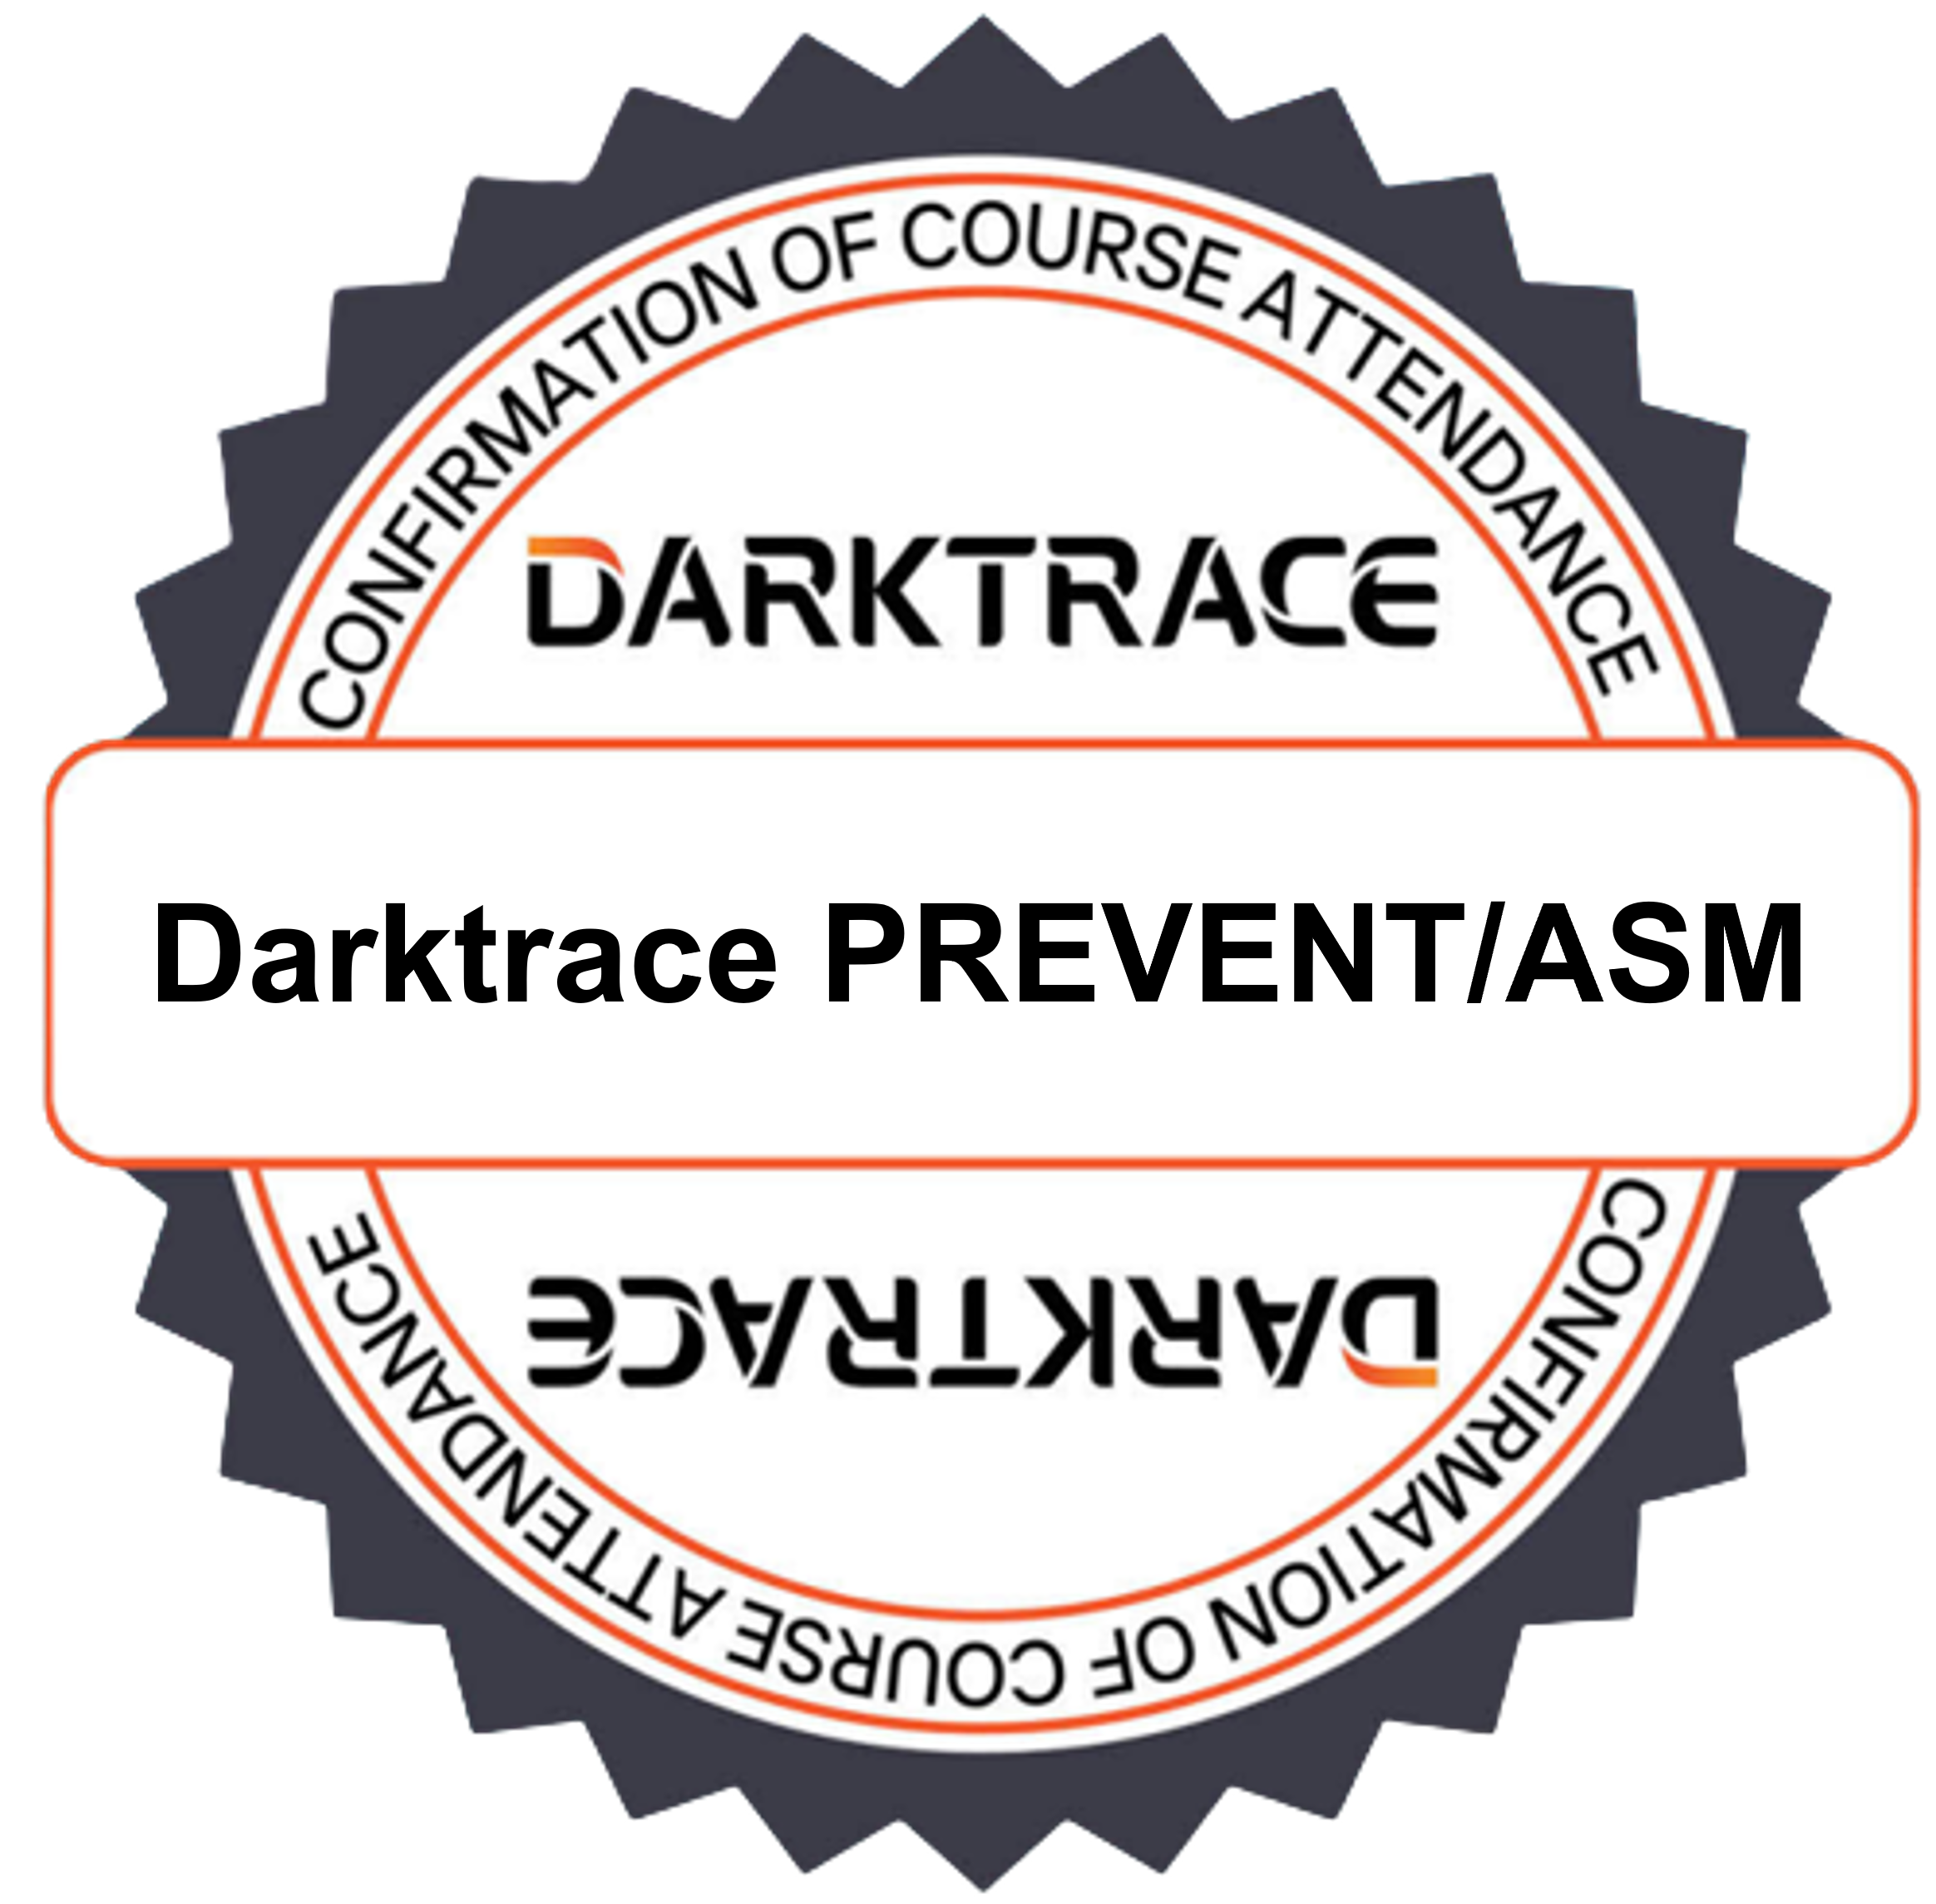 Darktrace course attendance PreventASM